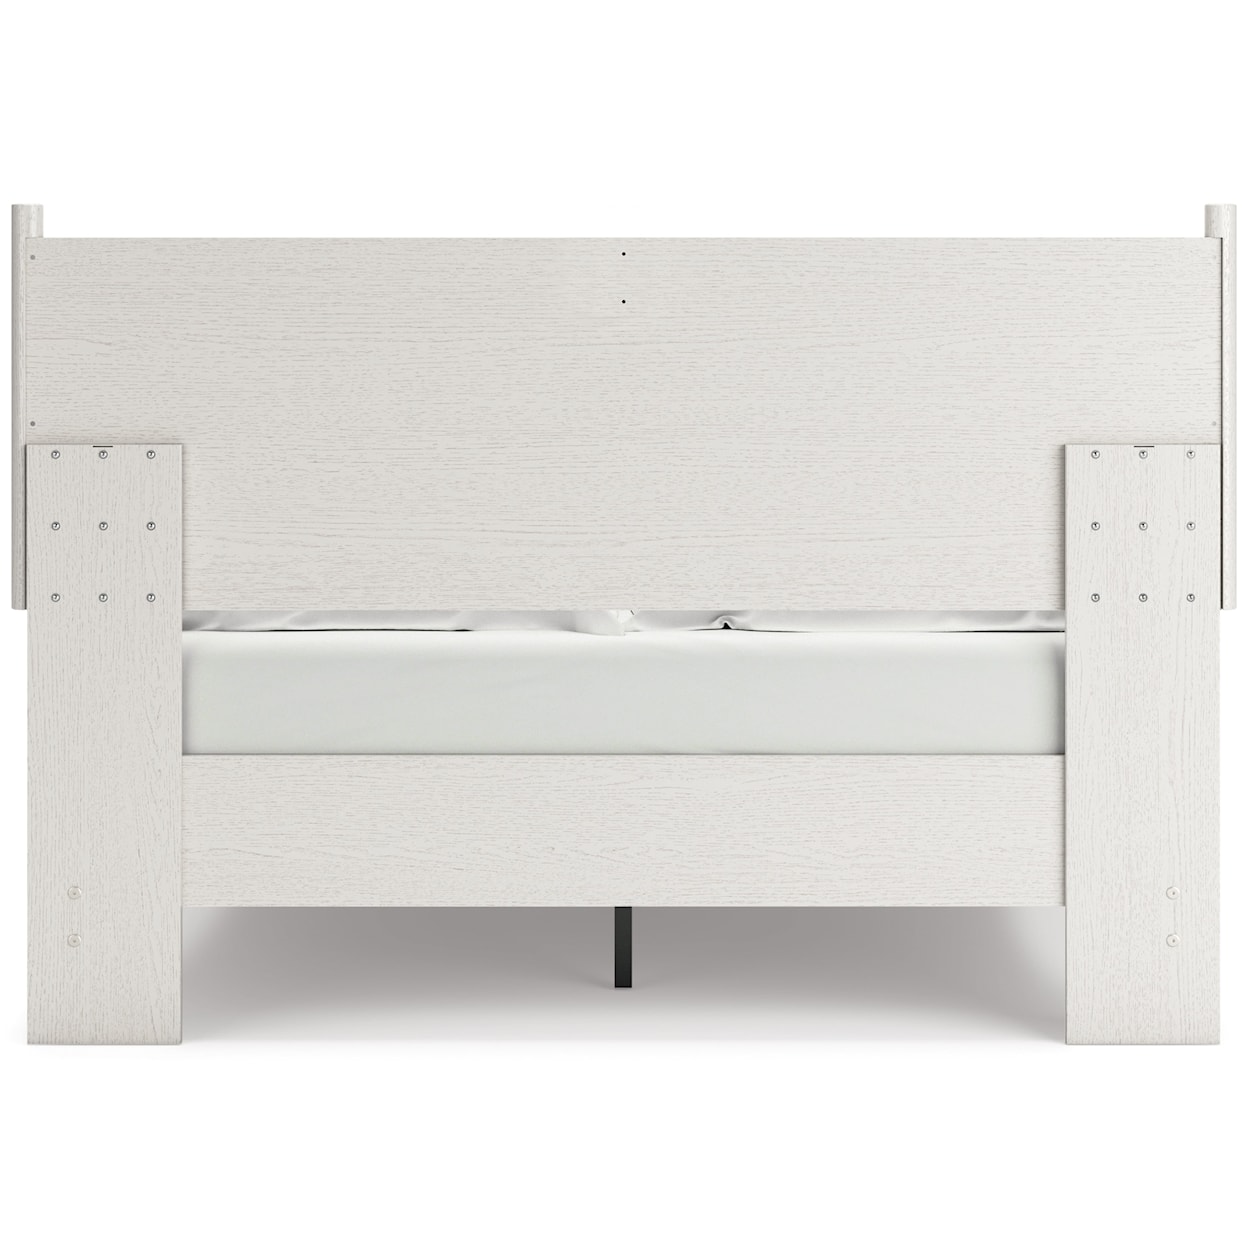 Signature Design Aprilyn Queen Panel Bed